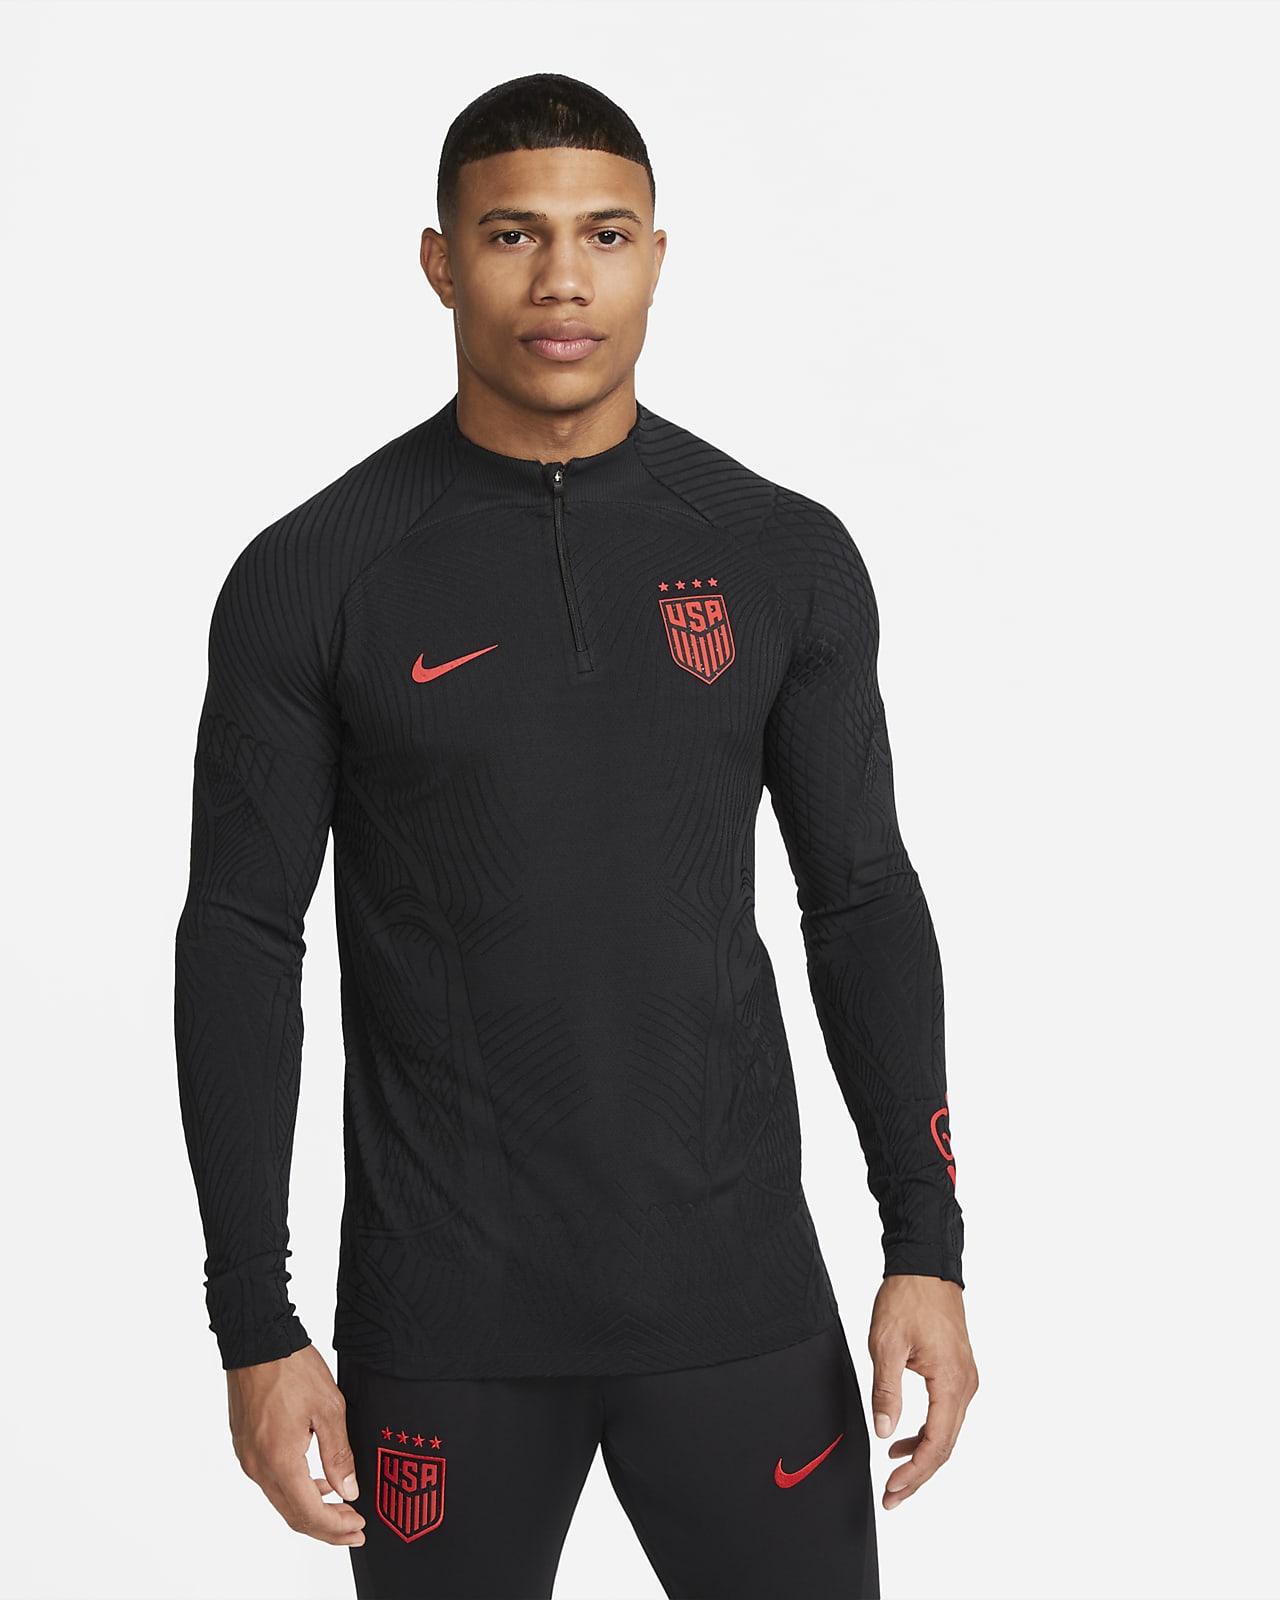 Men's Nike USA Legend Navy Tee - Official U.S. Soccer Store